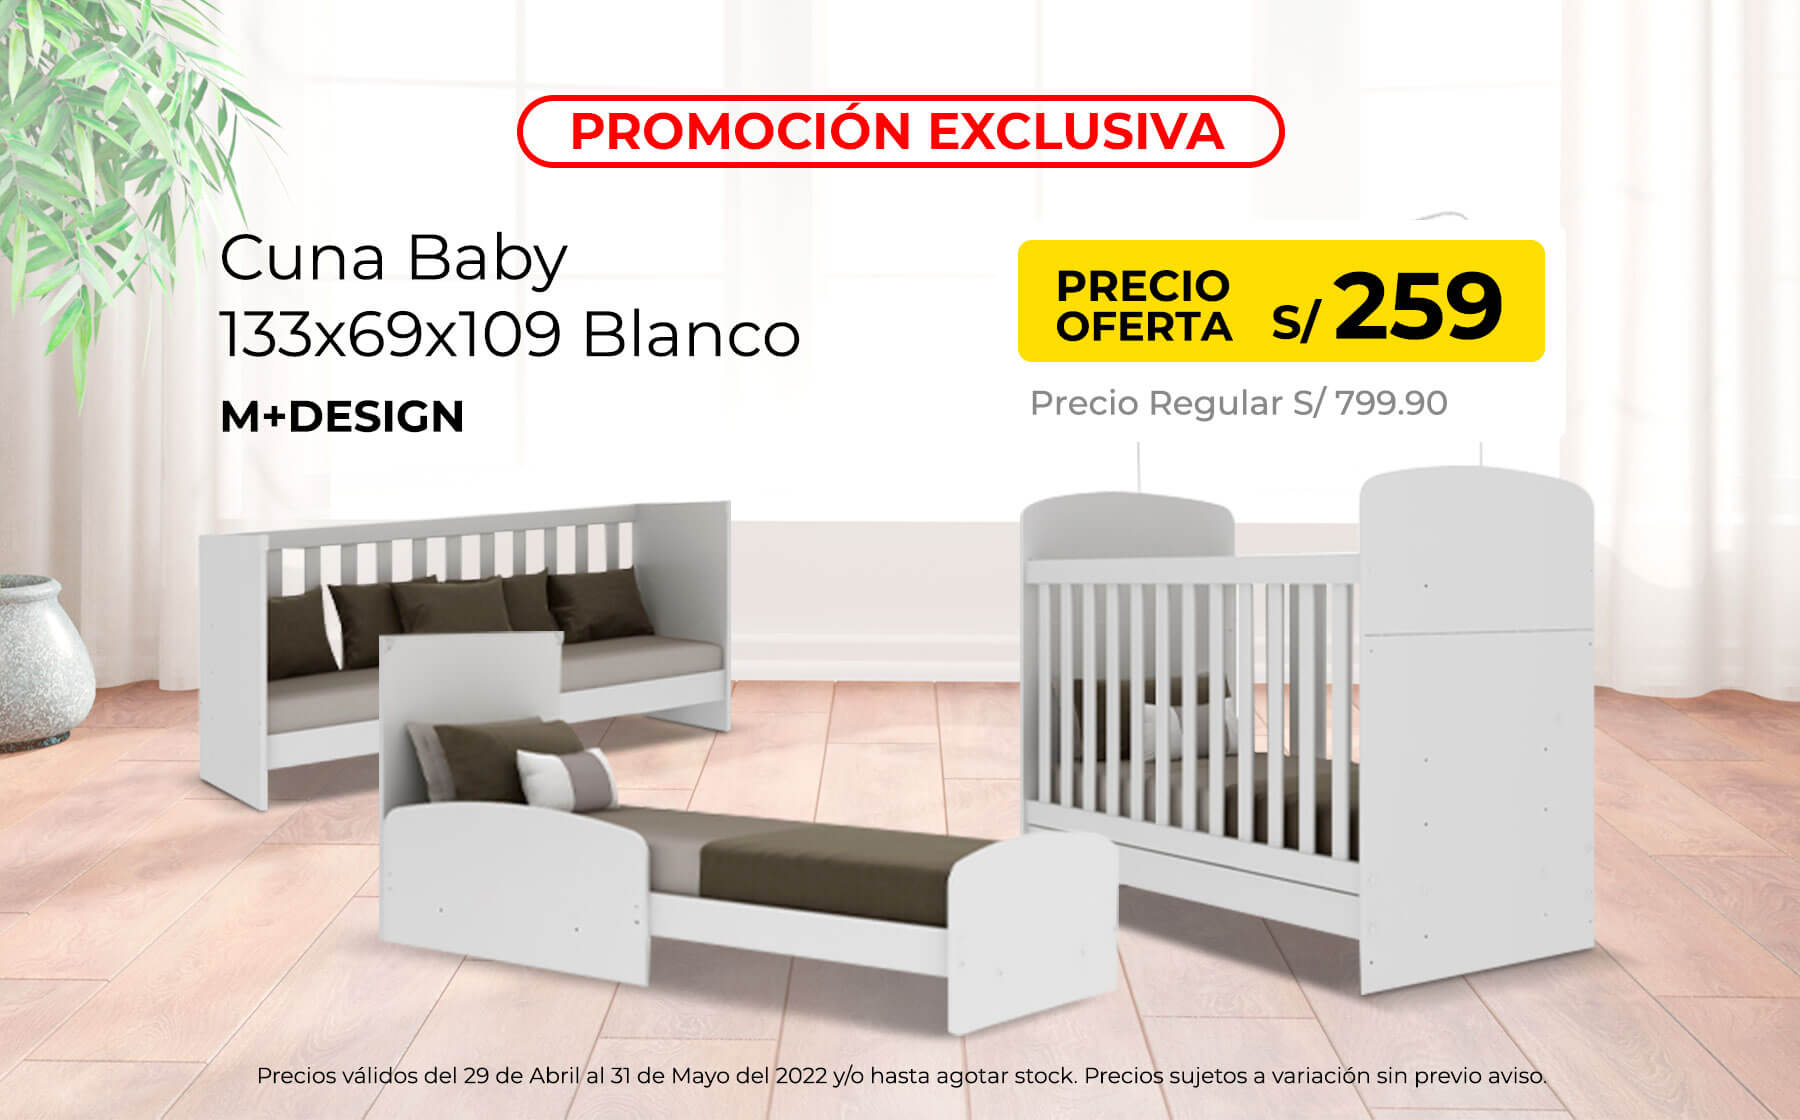 Cuna Baby M+Design 133x69x109 Blanco